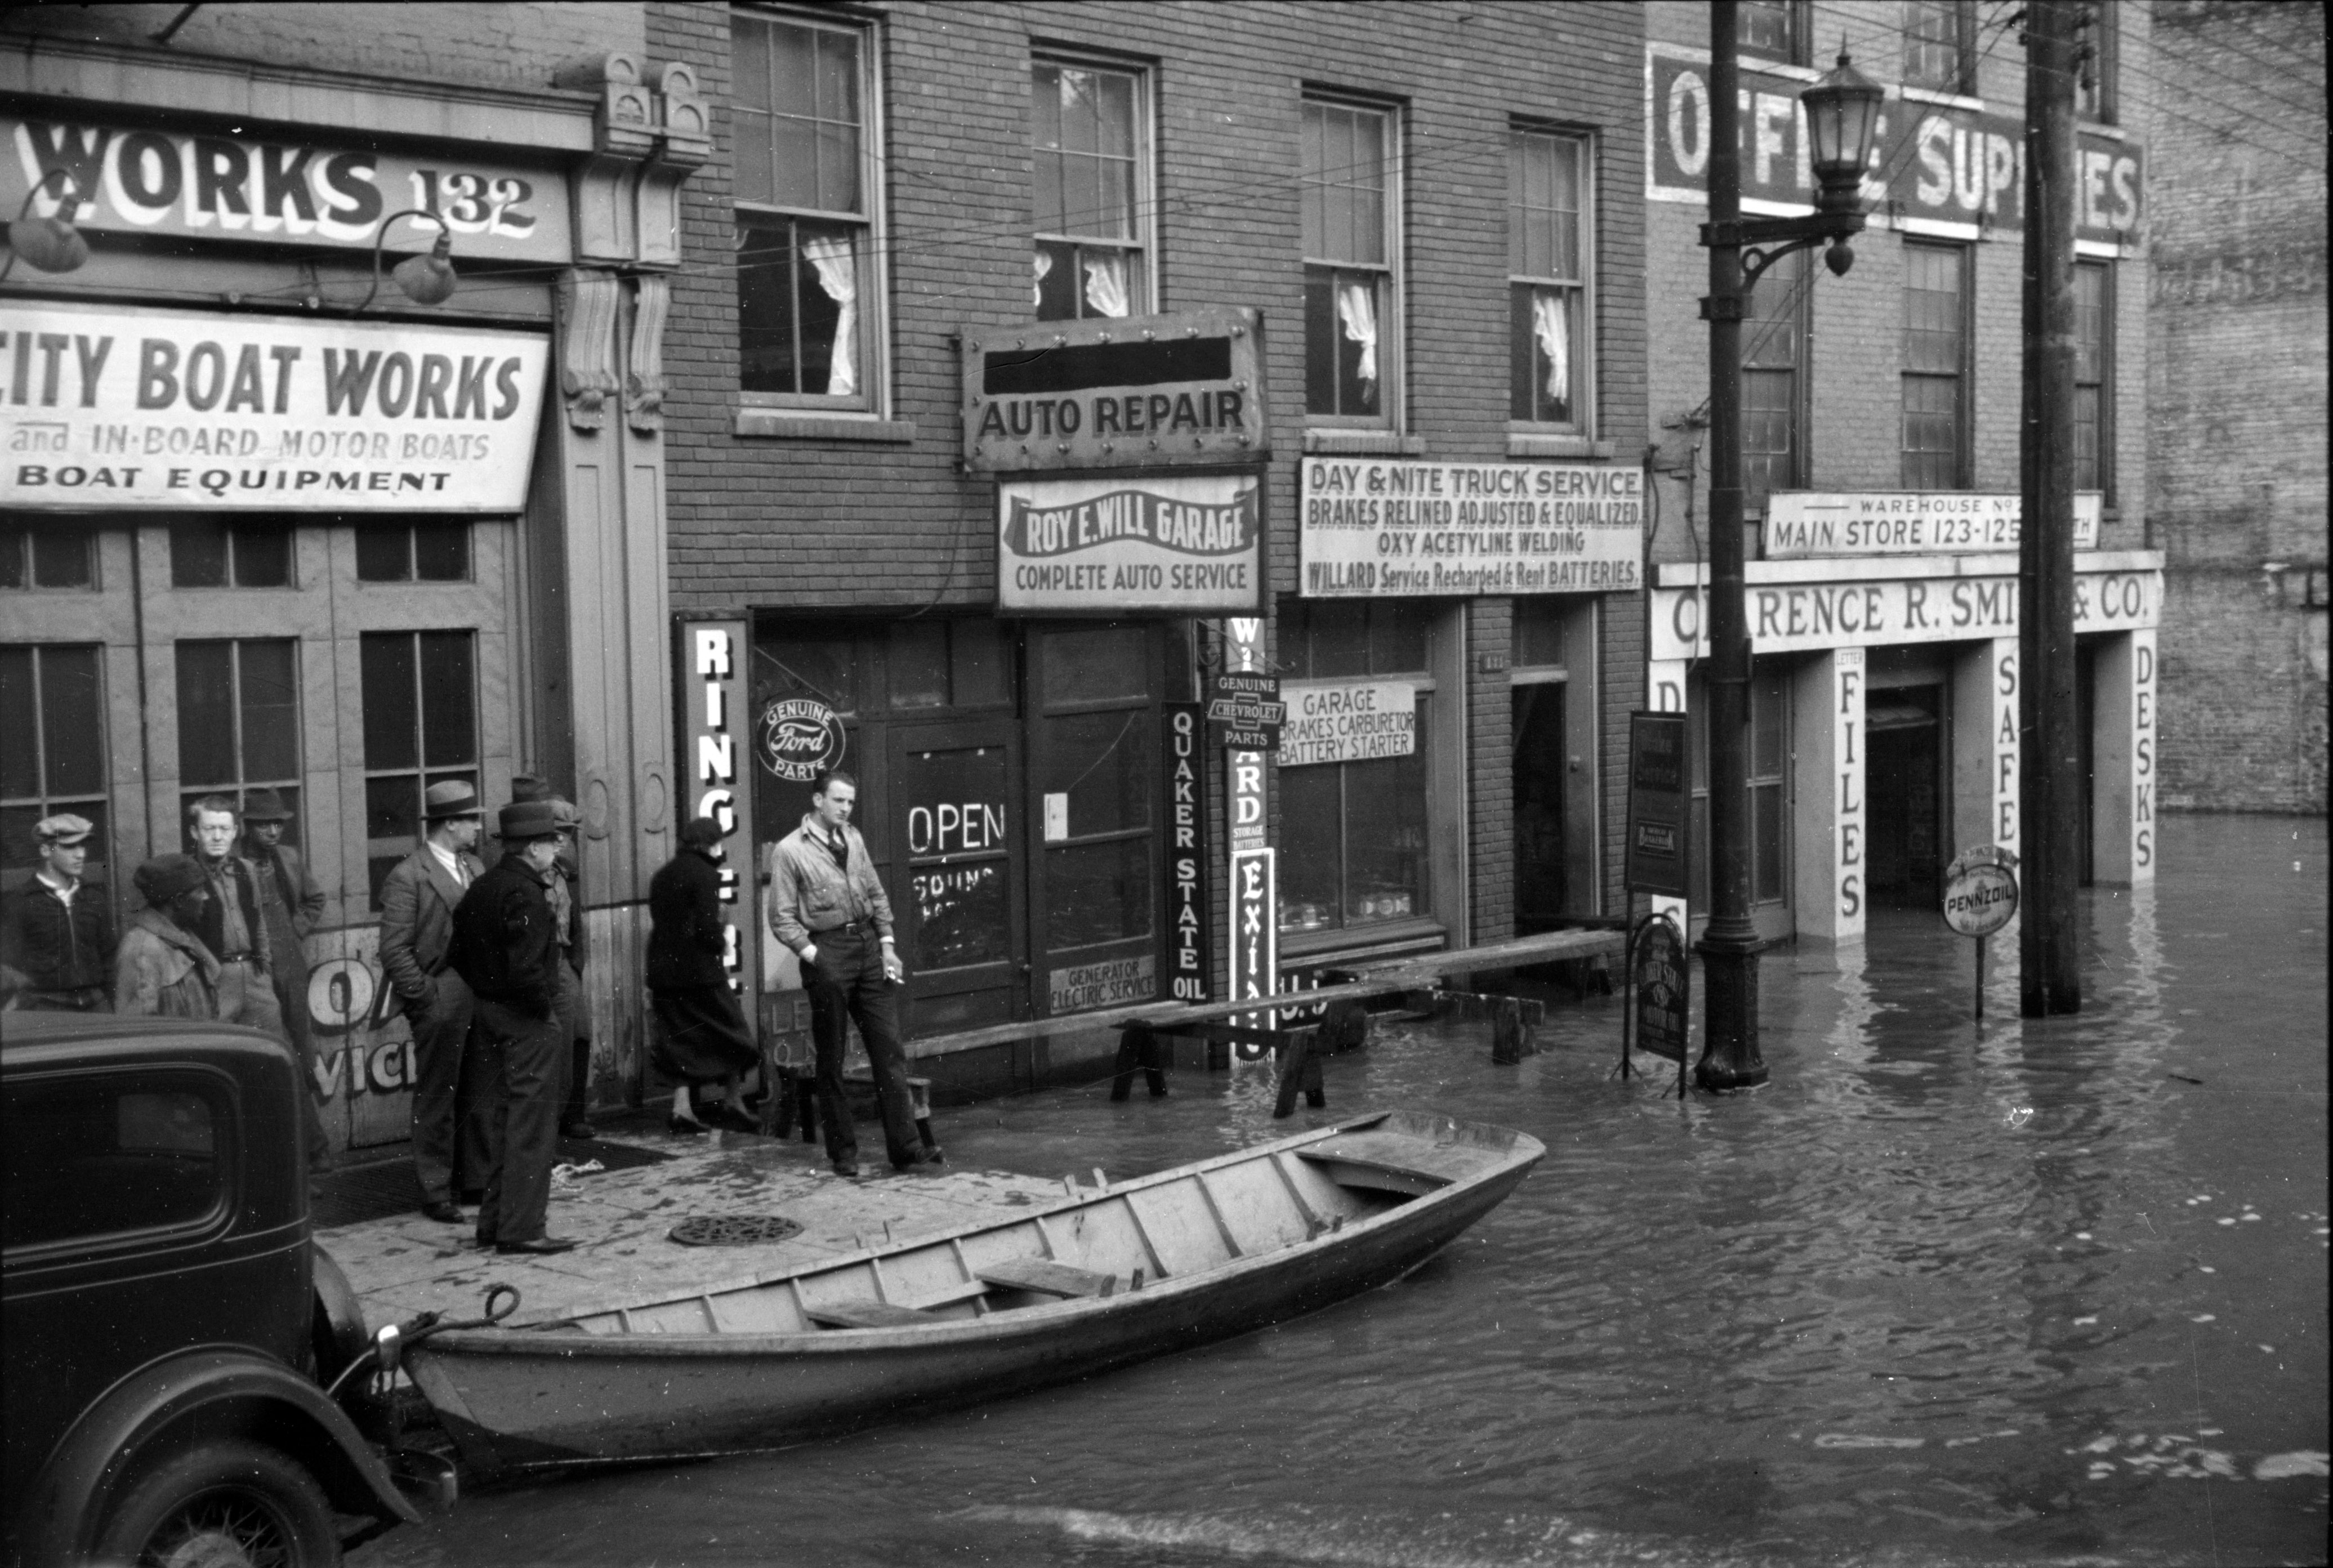 1936 Ohio River Flood in Louisville, Kentucky image - Free stock photo - Public Domain photo ...